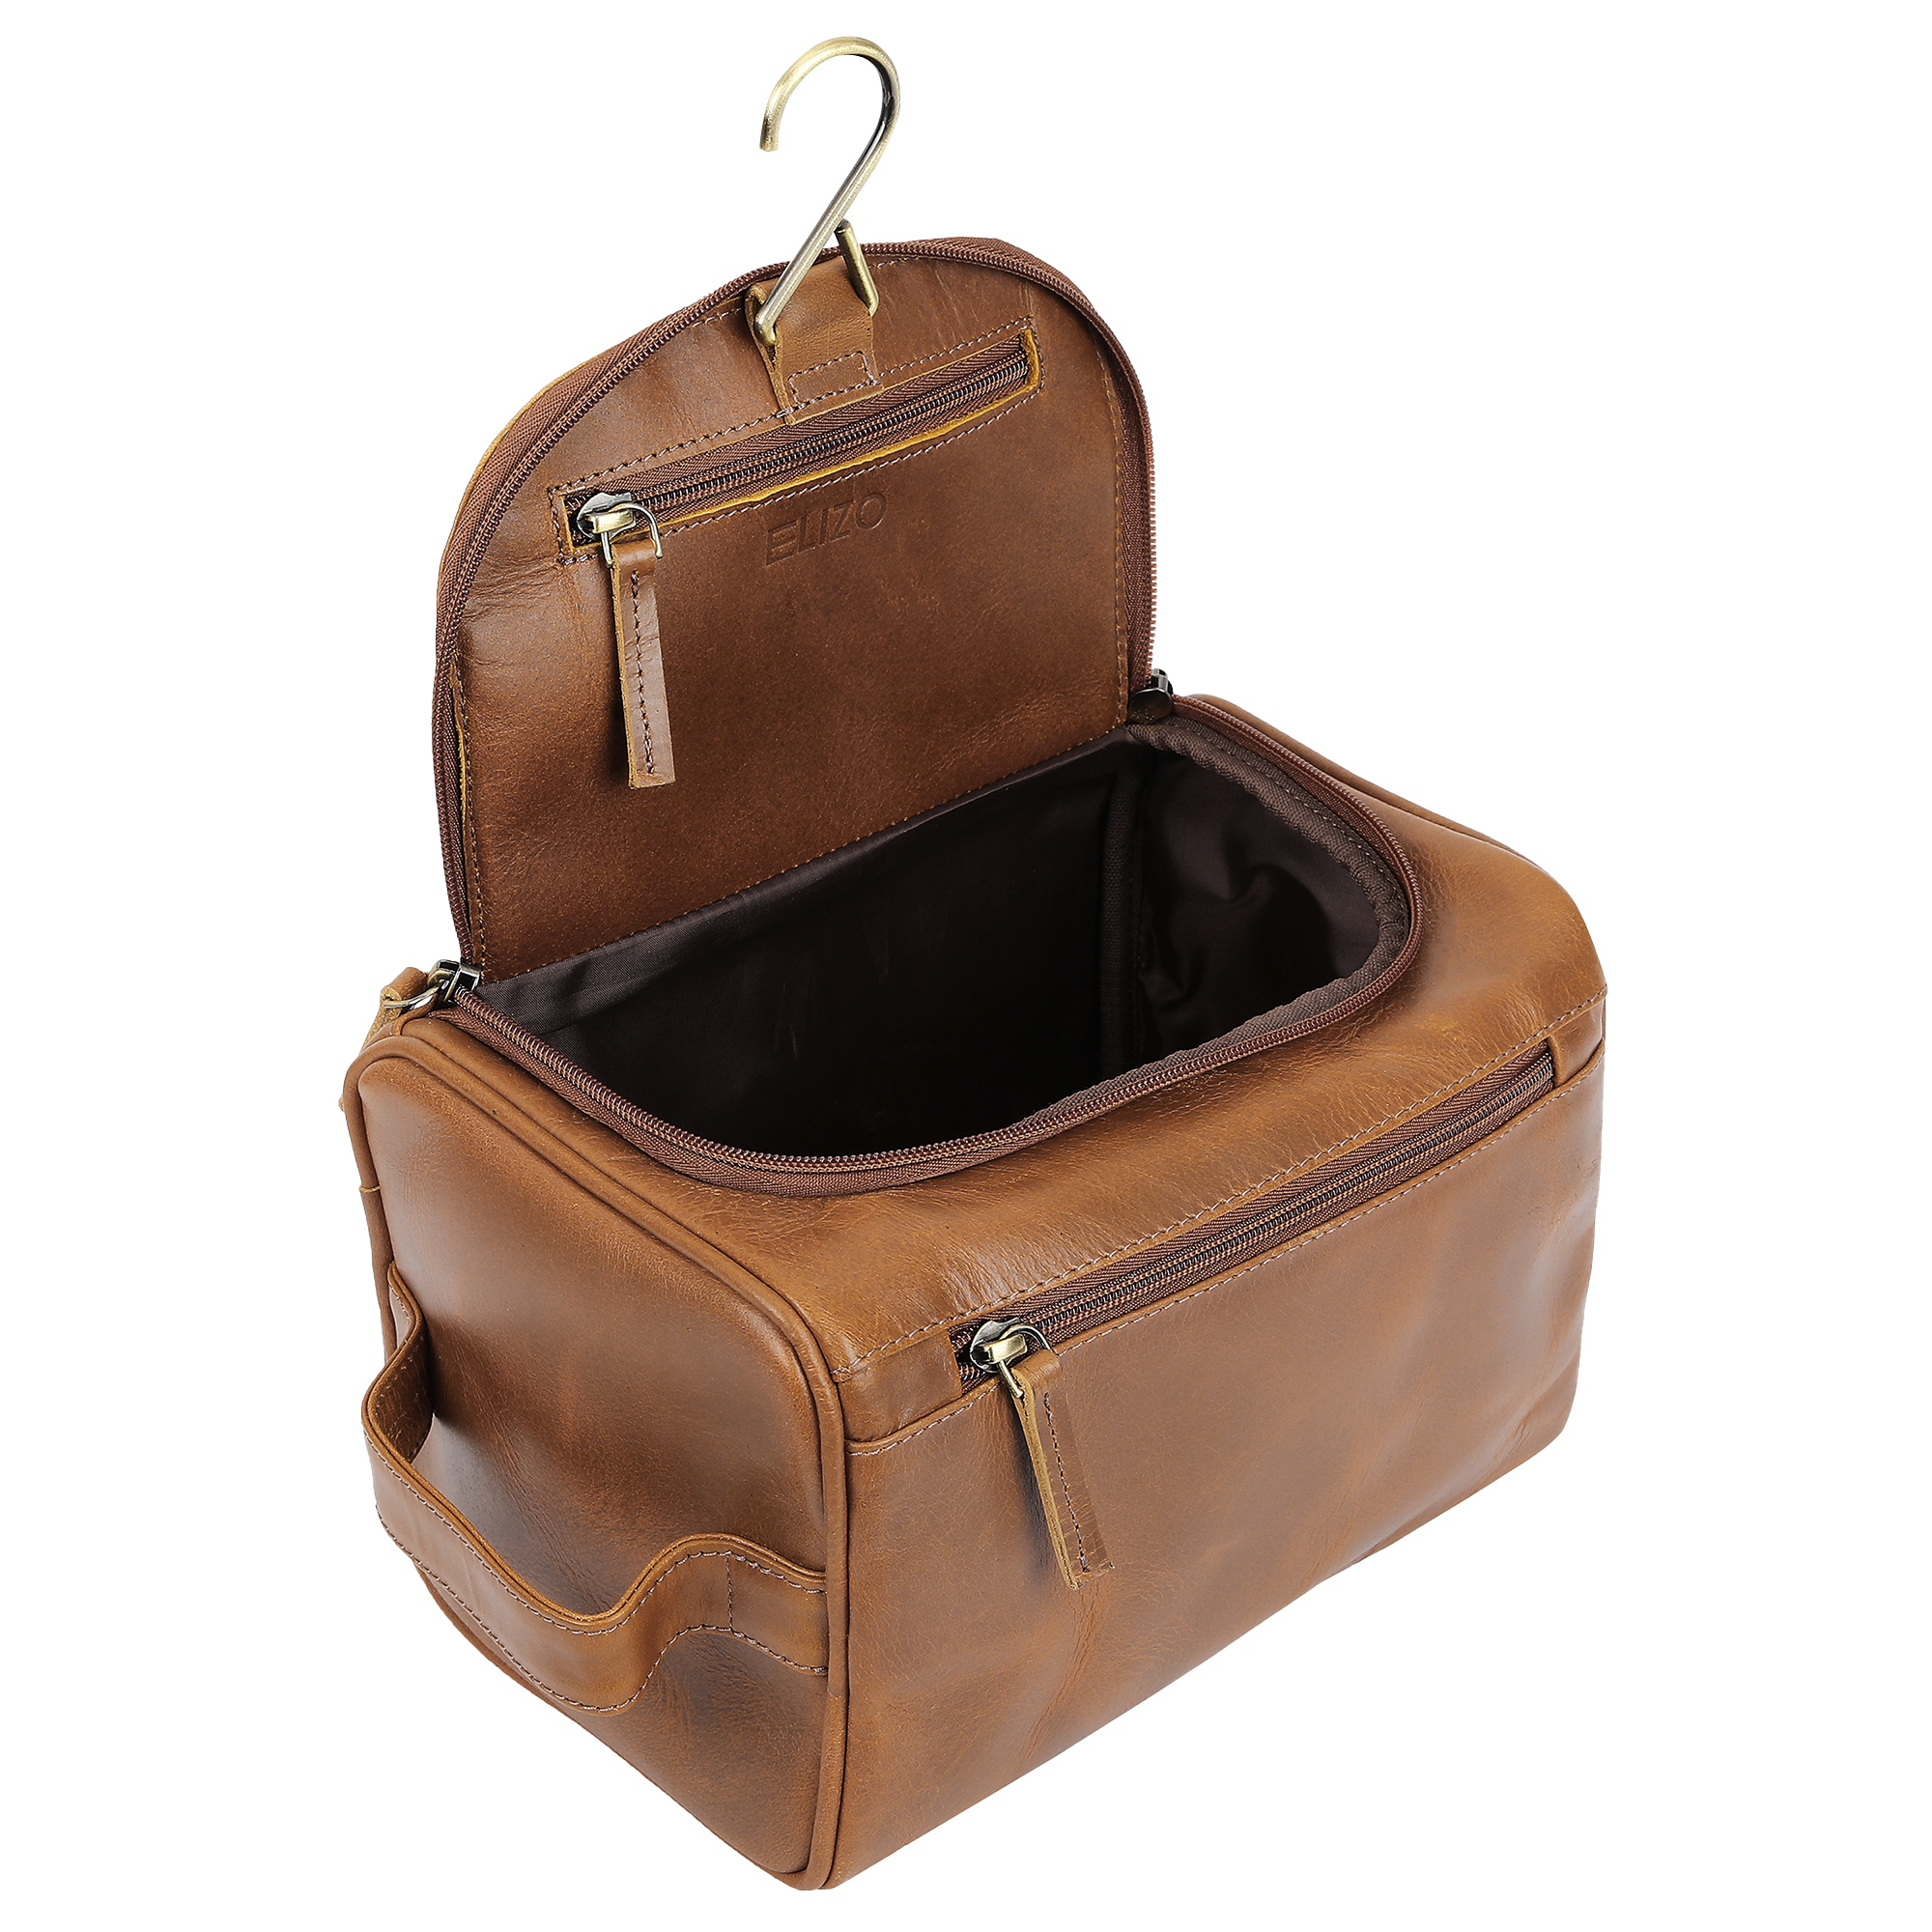 Leather Toiletry Bag Dopp Kit - Savanna (L)